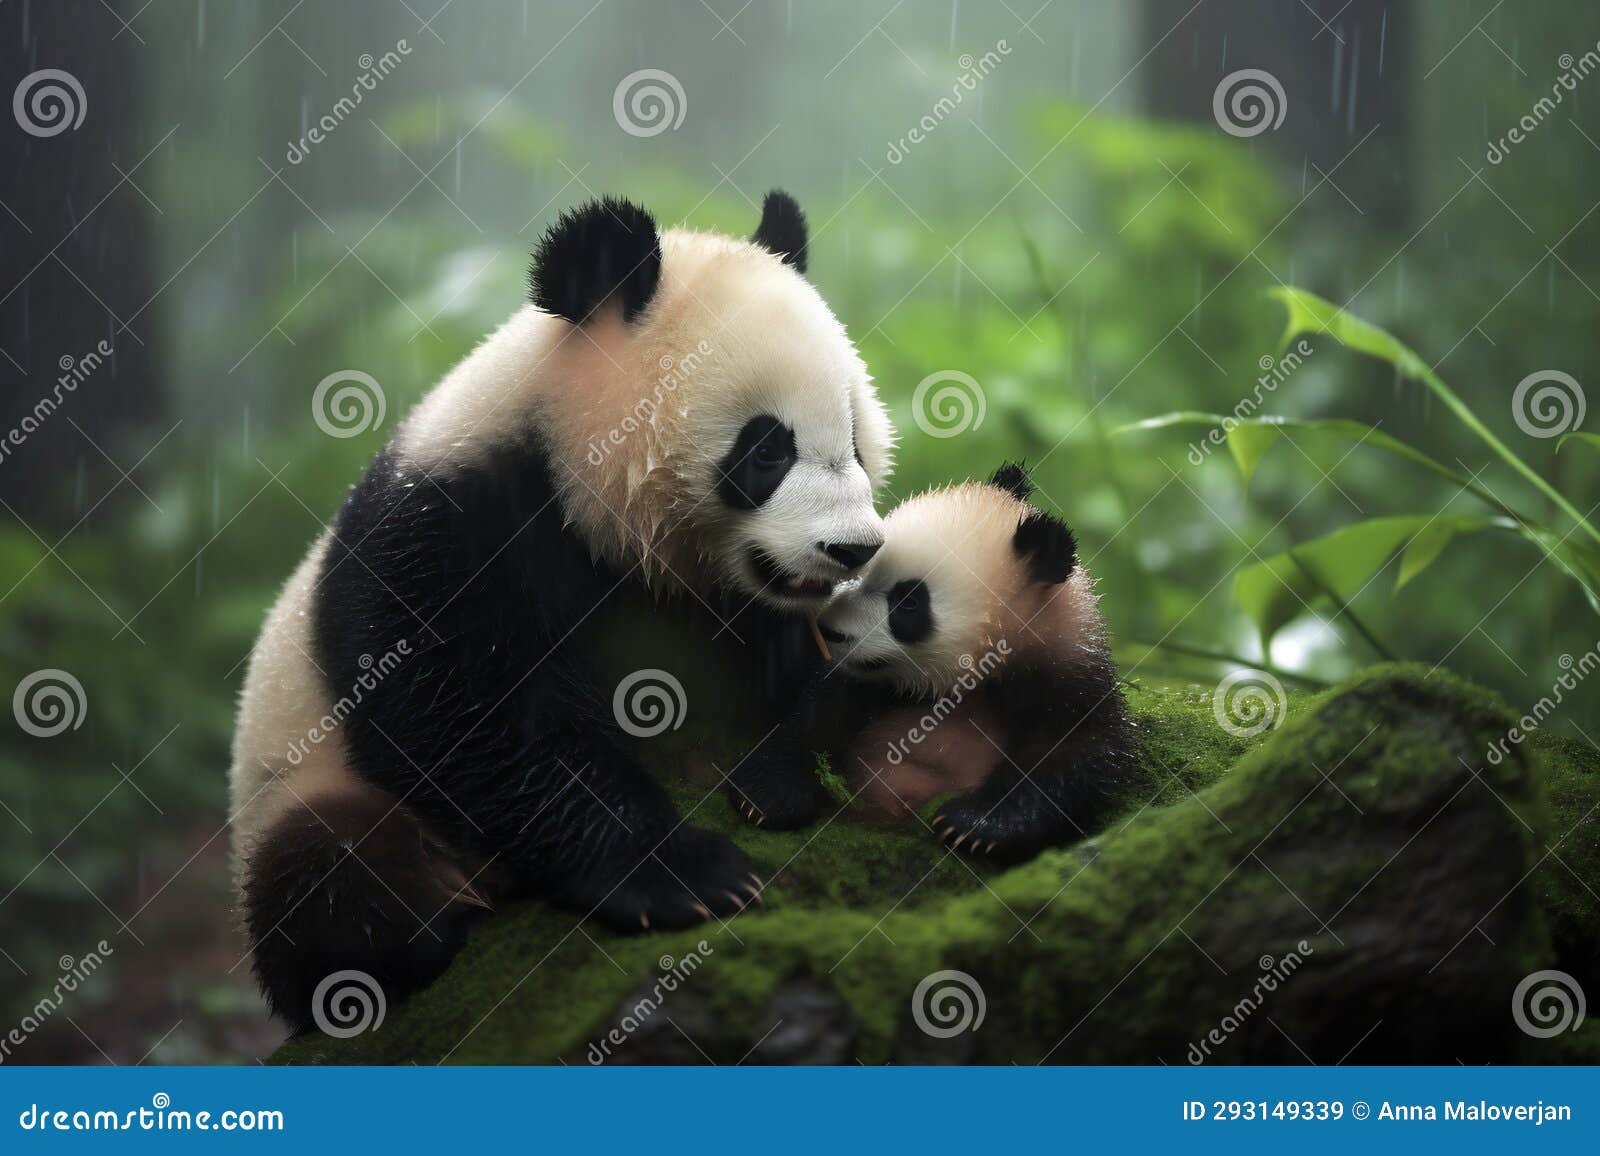 Kawaii Panda Images – Browse 15,181 Stock Photos, Vectors, and